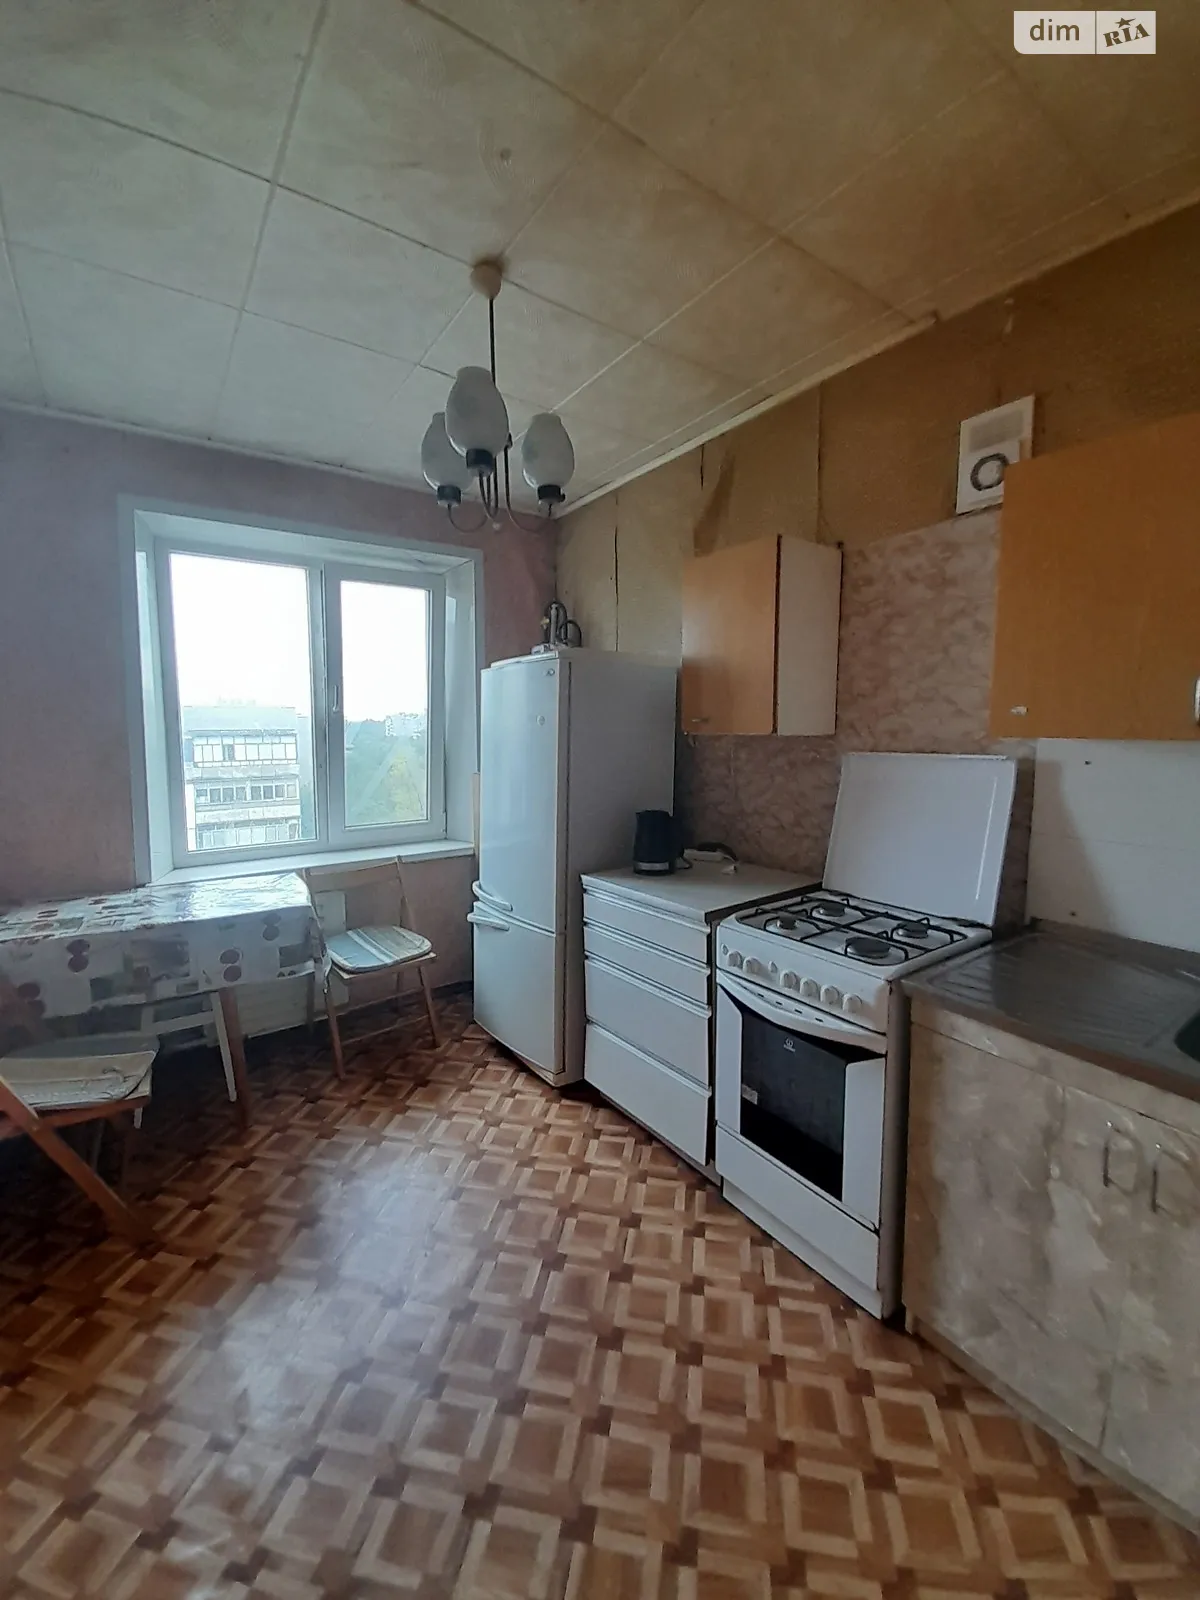 3-комнатная квартира 68 кв. м в Запорожье, вул. Авраменко - фото 1